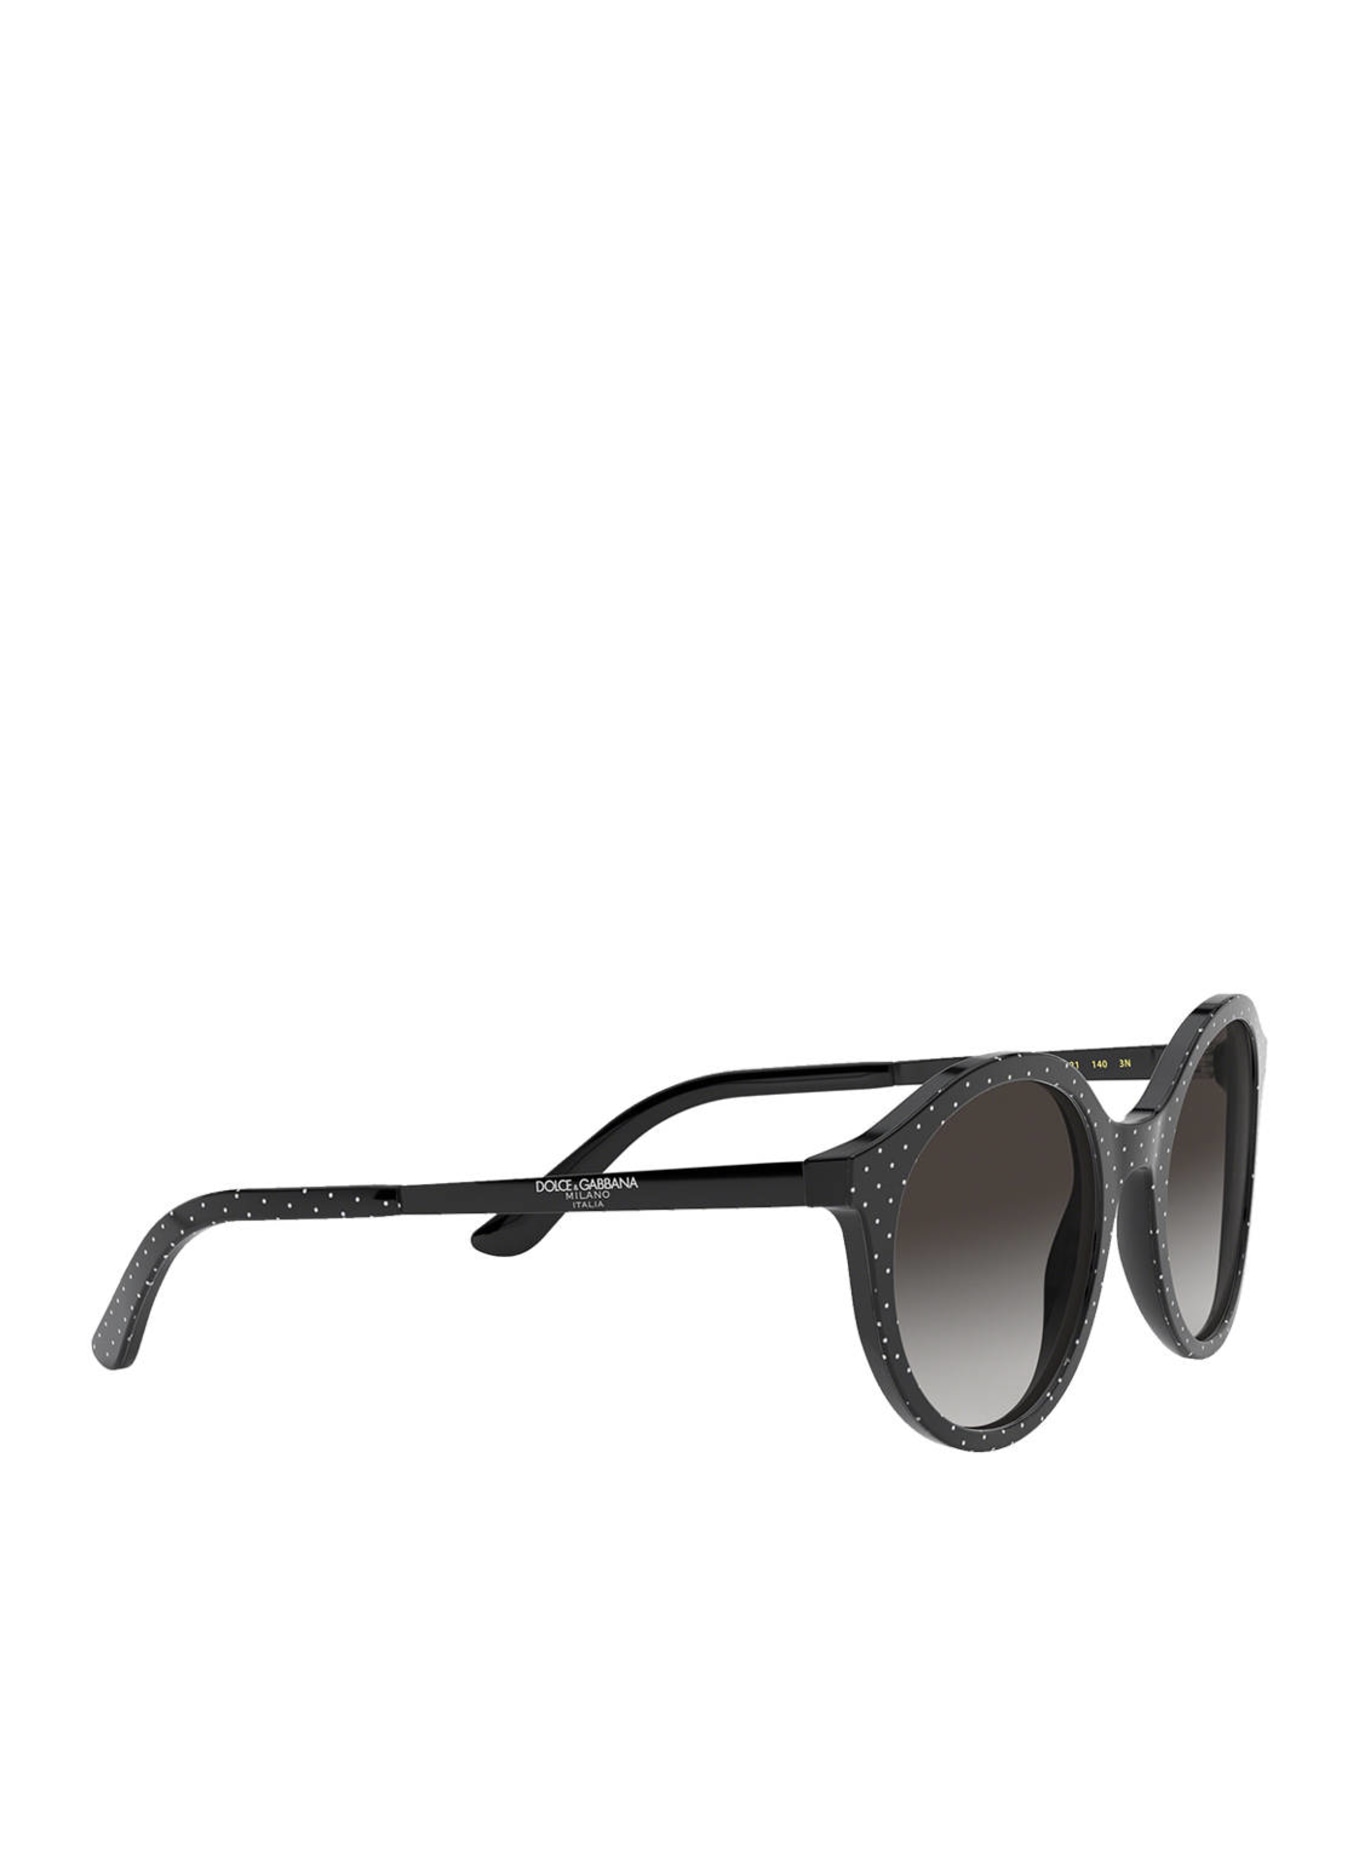 DOLCE & GABBANA Sunglasses DG 4358, Color: 3126/8G - BLACK/DARK GRAY GRADIENT (Image 3)